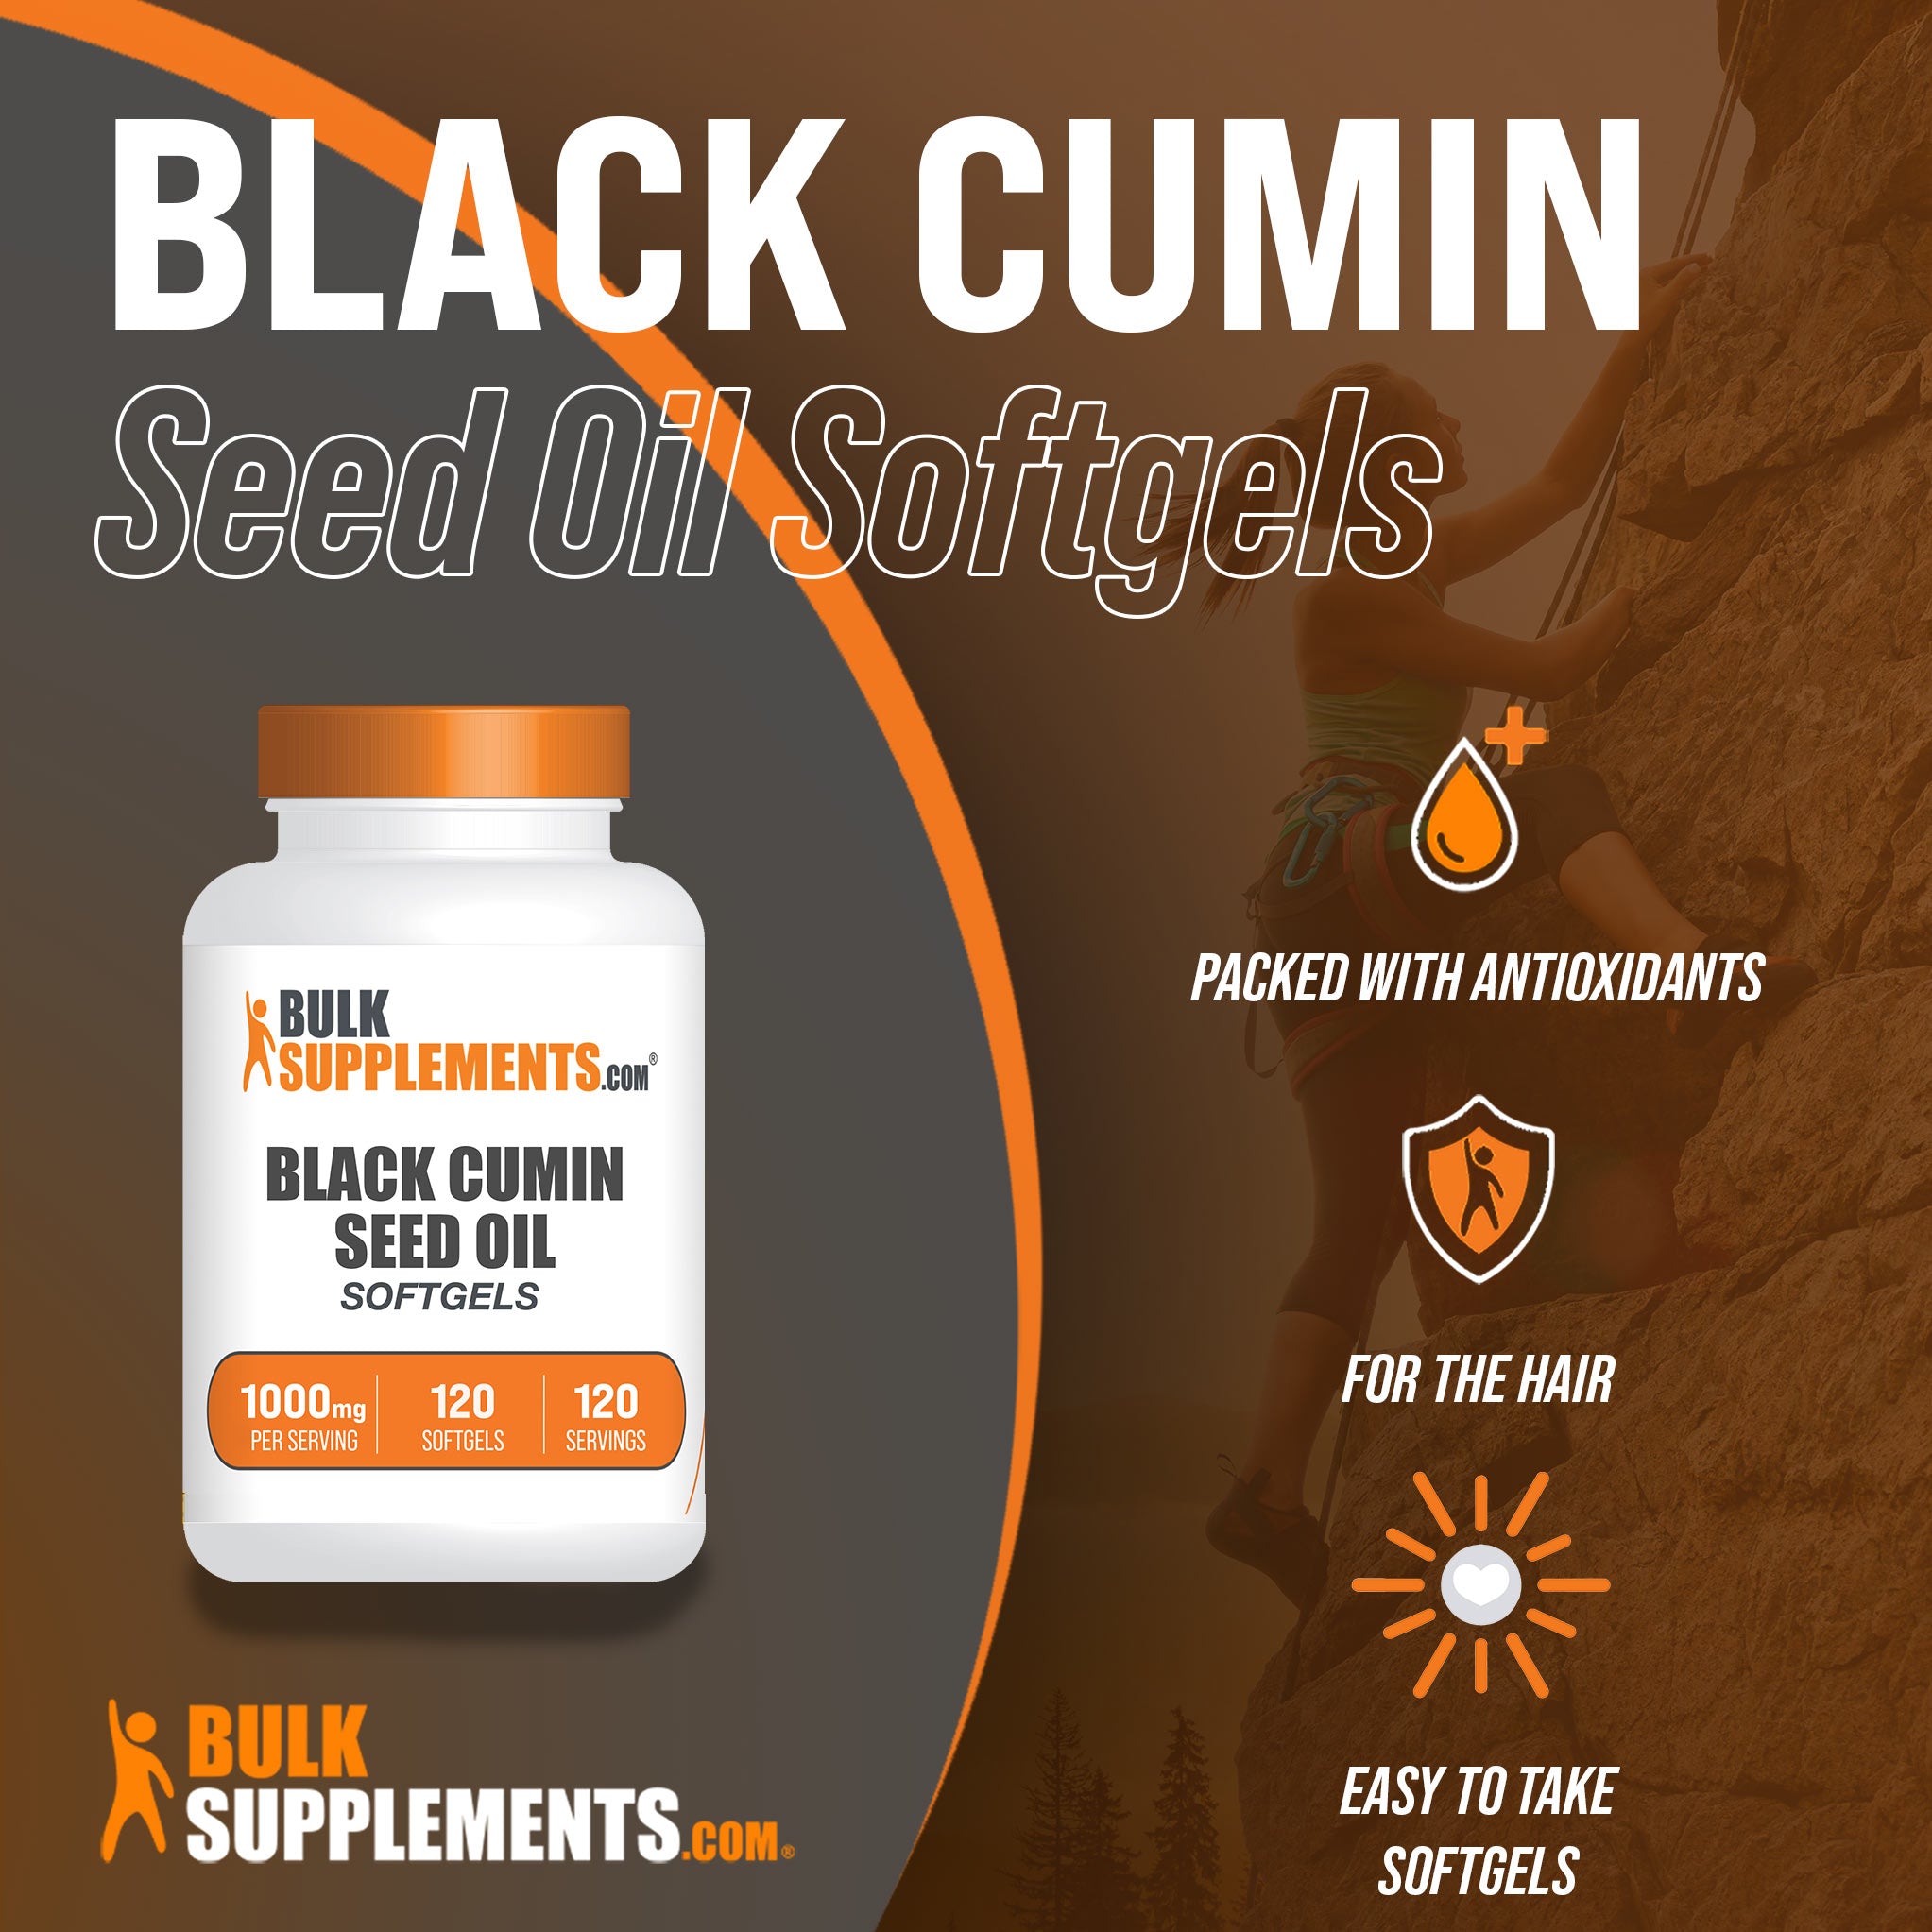 Black Cumin Seed Oil Softgels Main Benefits Image